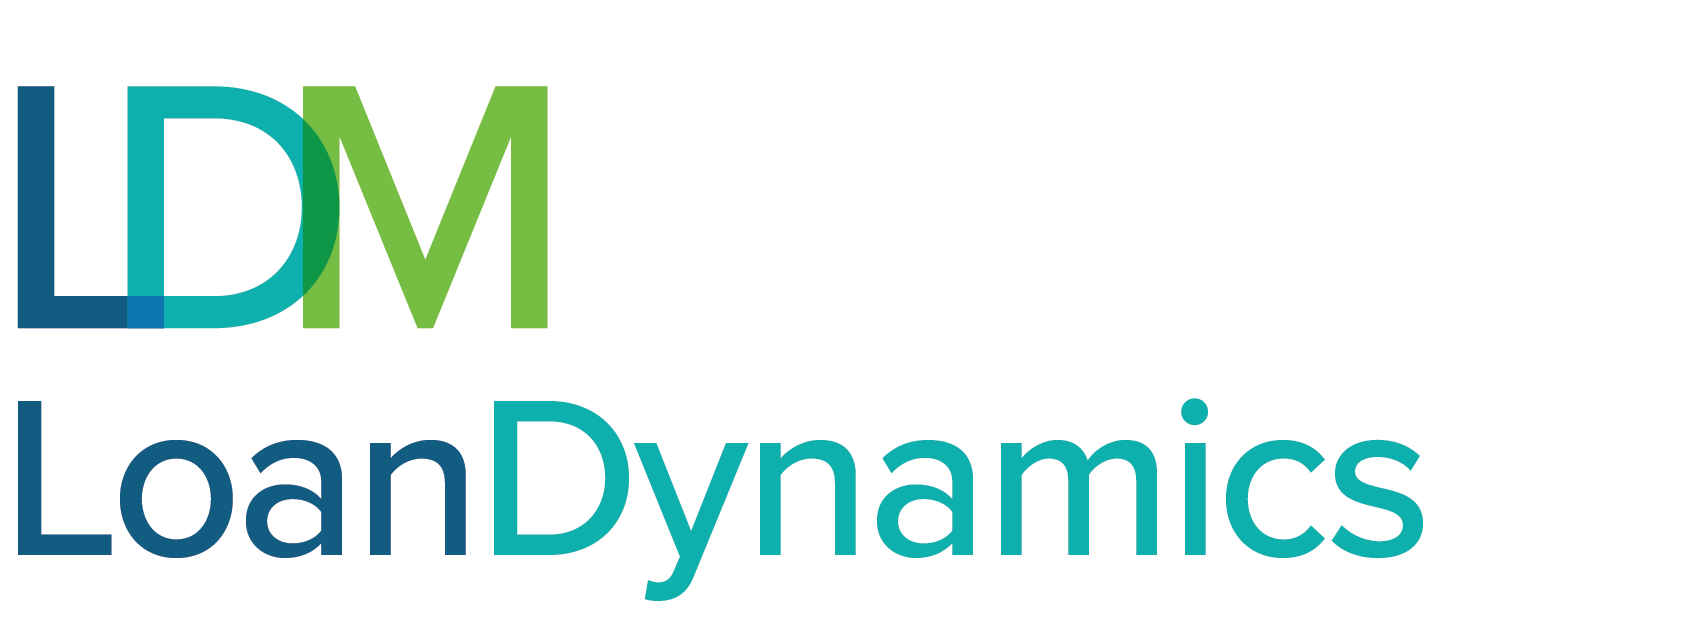 LoanDynamics logo